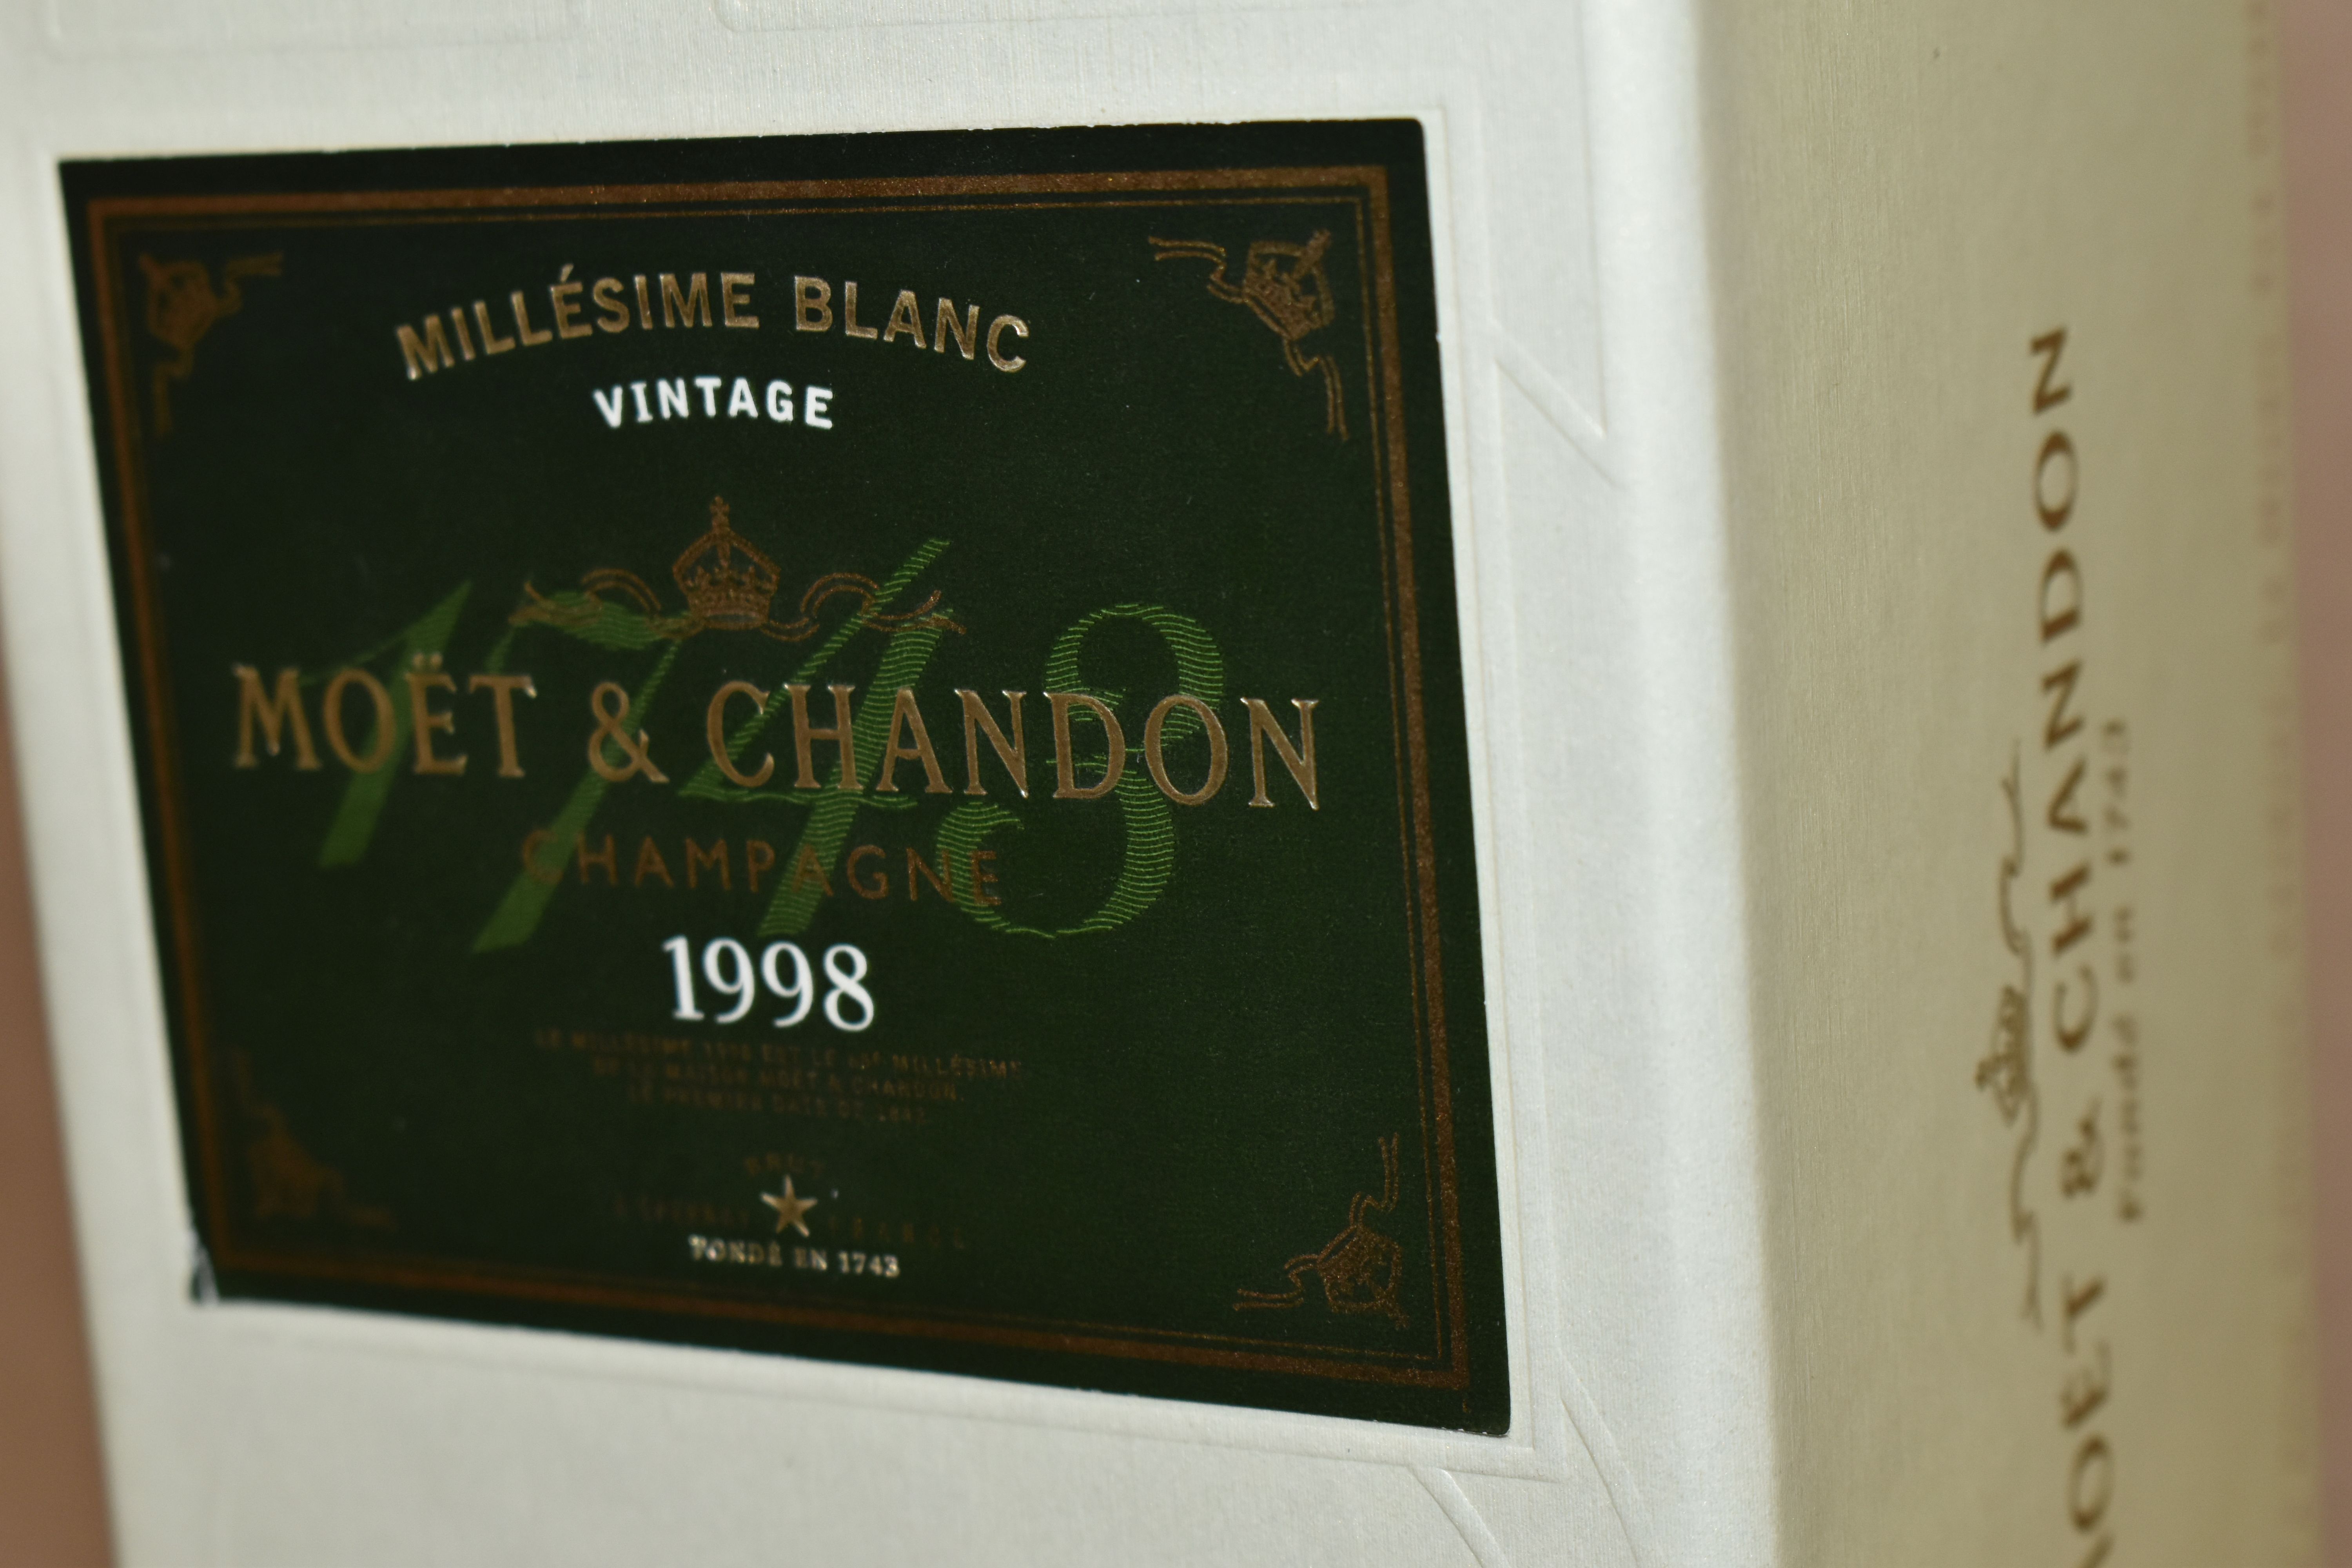 CHAMPAGNE, One Bottle of Moet & Chandon Millesime Blanc Vintage 1998, 12.5% vol. 750ml, sealed in - Image 2 of 5